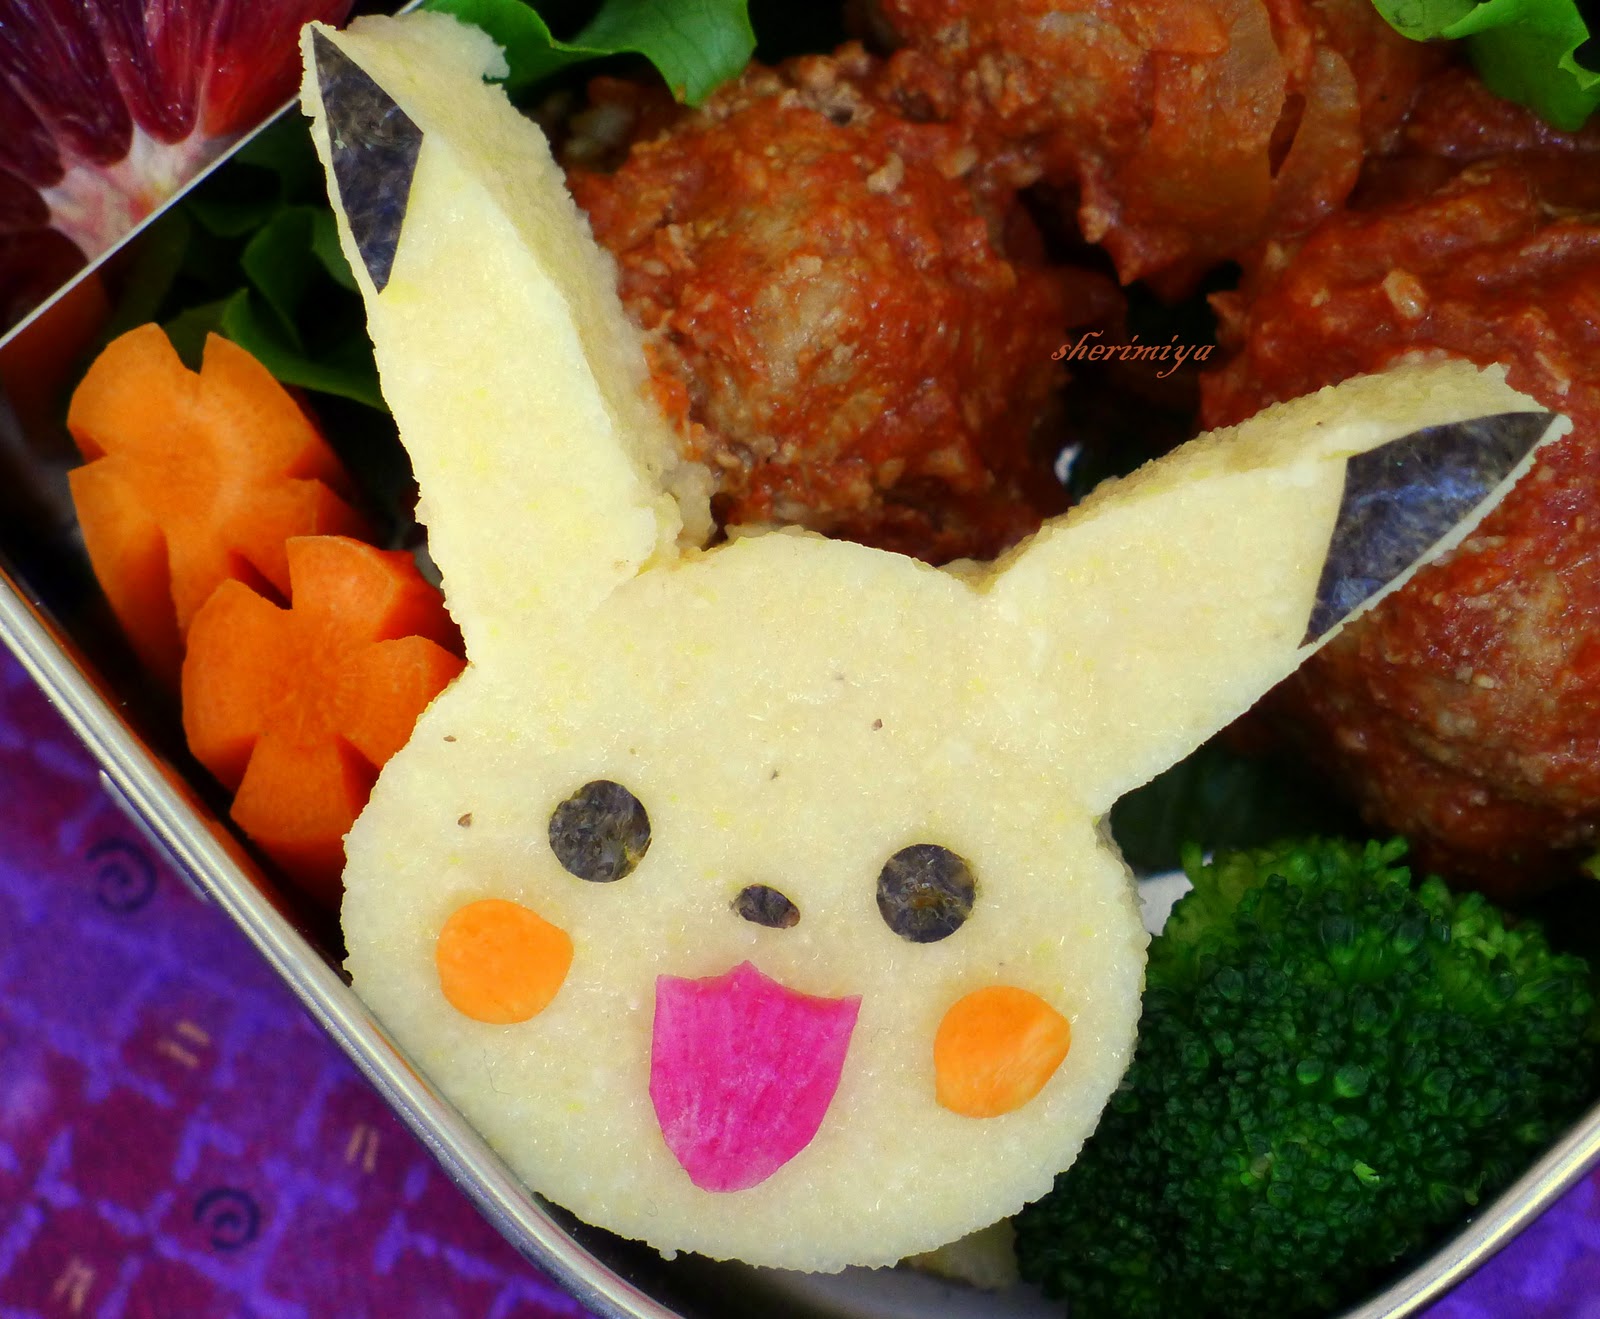 How to Make a Bento (#11 Pikachu rice ball) ポケモン弁当 Ingredients: Seeweed,  Rice, Kani-Kama, Egg, and salt!